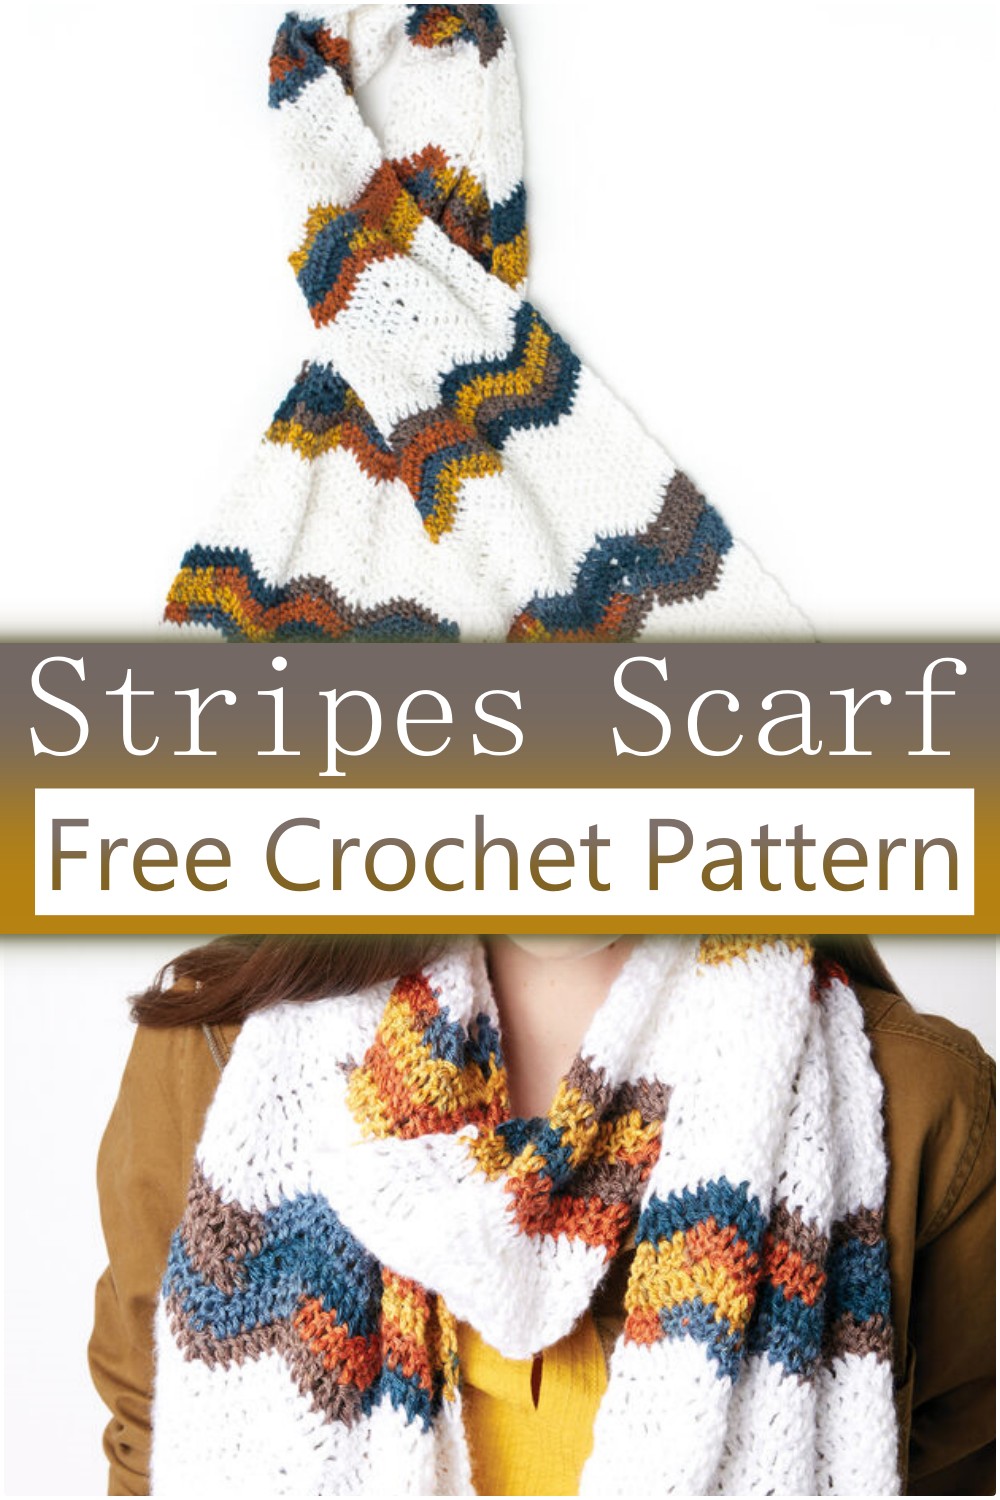 Free Crochet Scarf Pattern For Caron Yarn